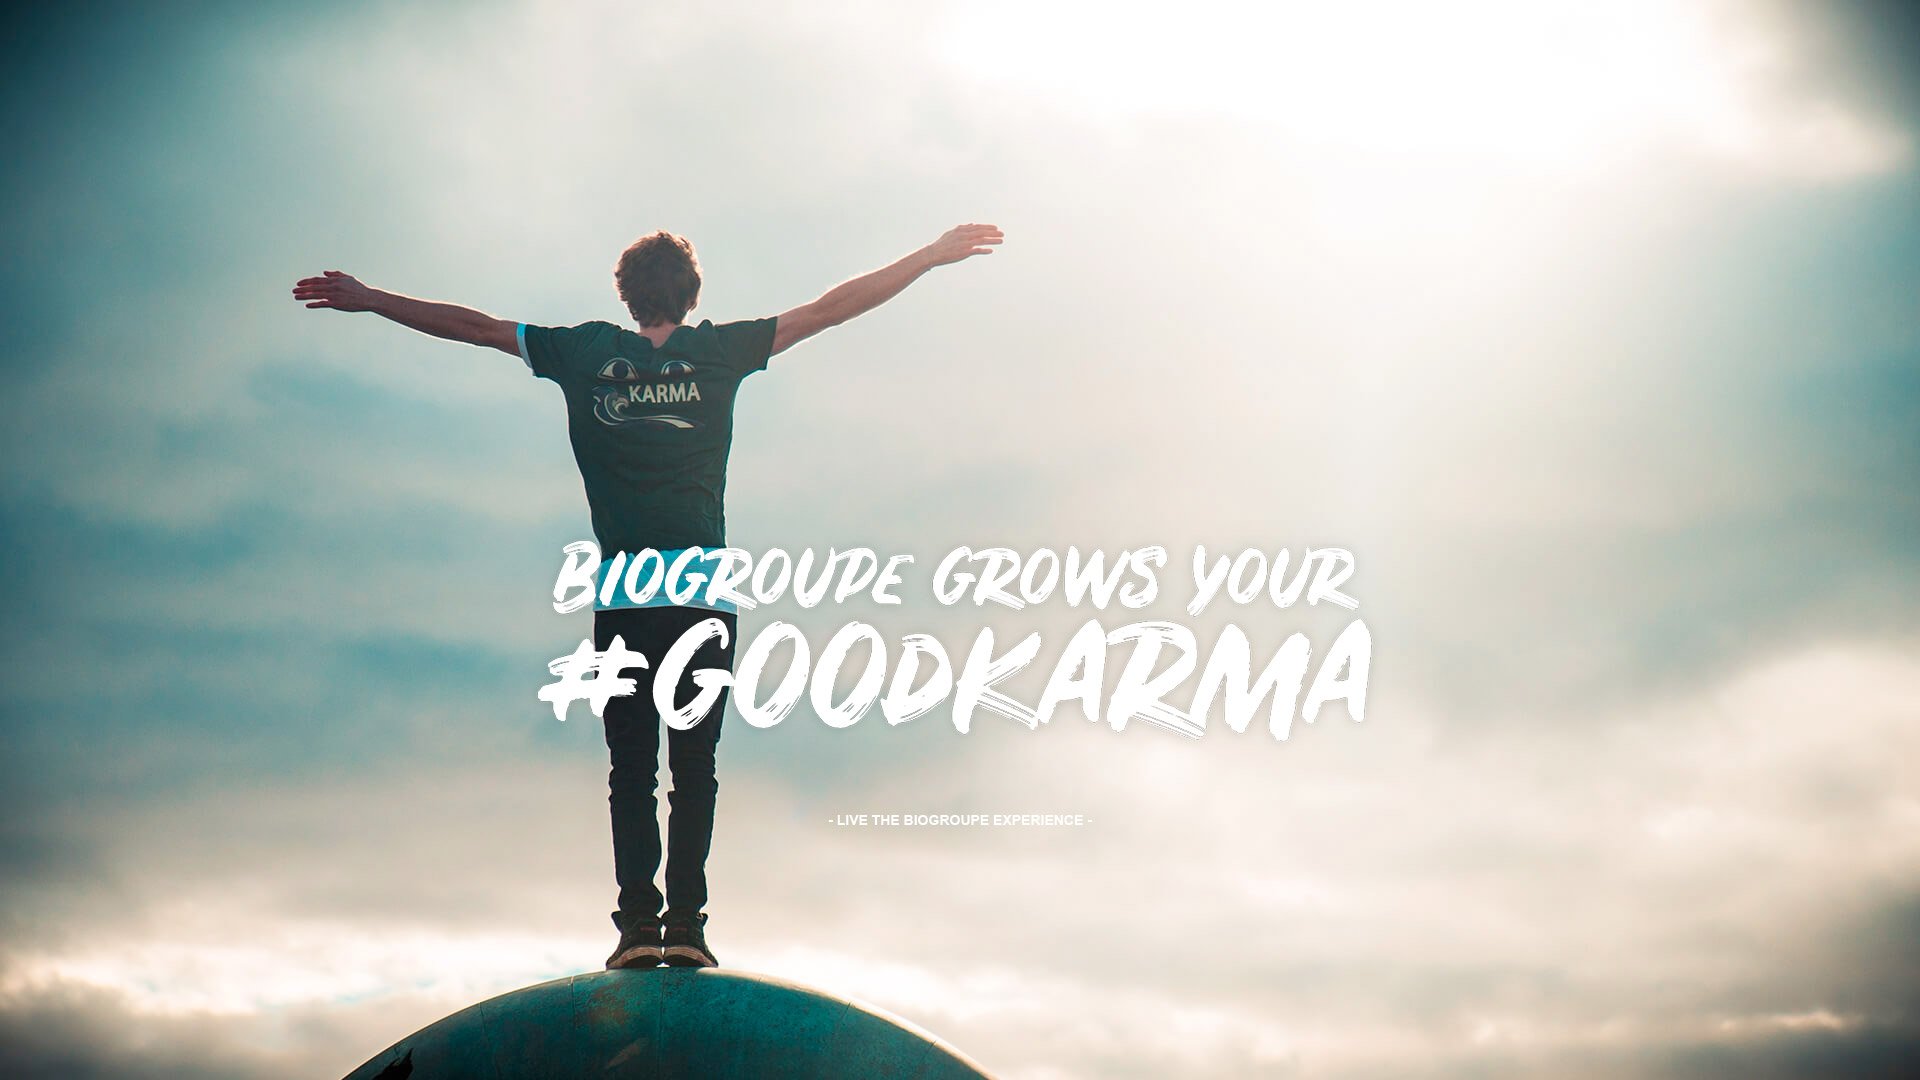 Biogroupe grows your #goodkarma